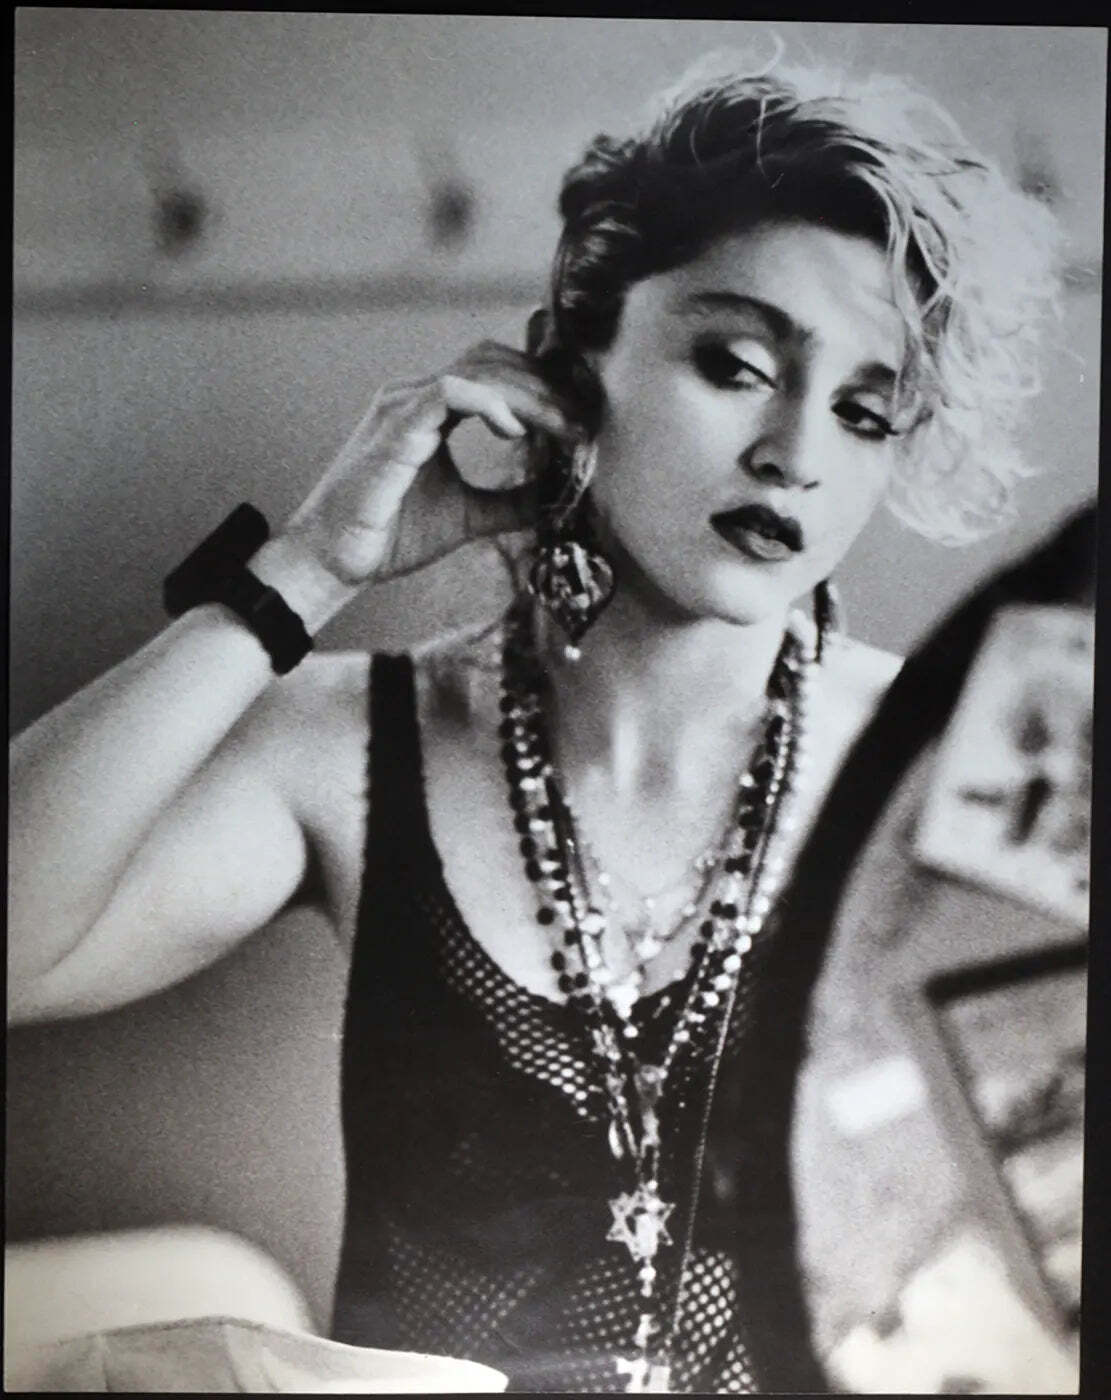 Vintage Press Photo Music Madonna 1985 FT 308 - print 10 5/8x14 5/8in